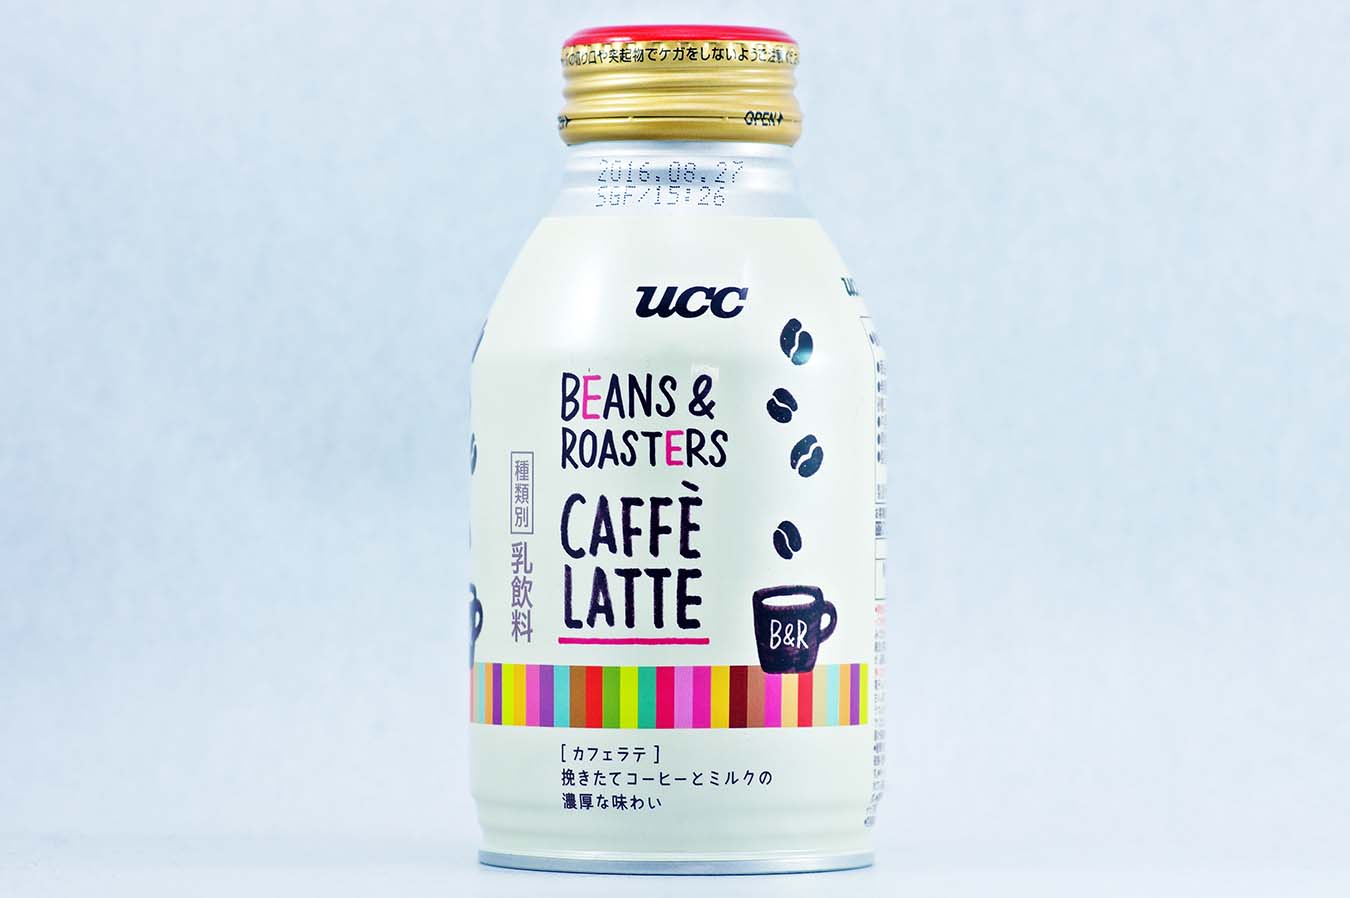 UCC BEANS & ROASTERS CAFFÈ LATTE 260gボトル缶 2015年10月